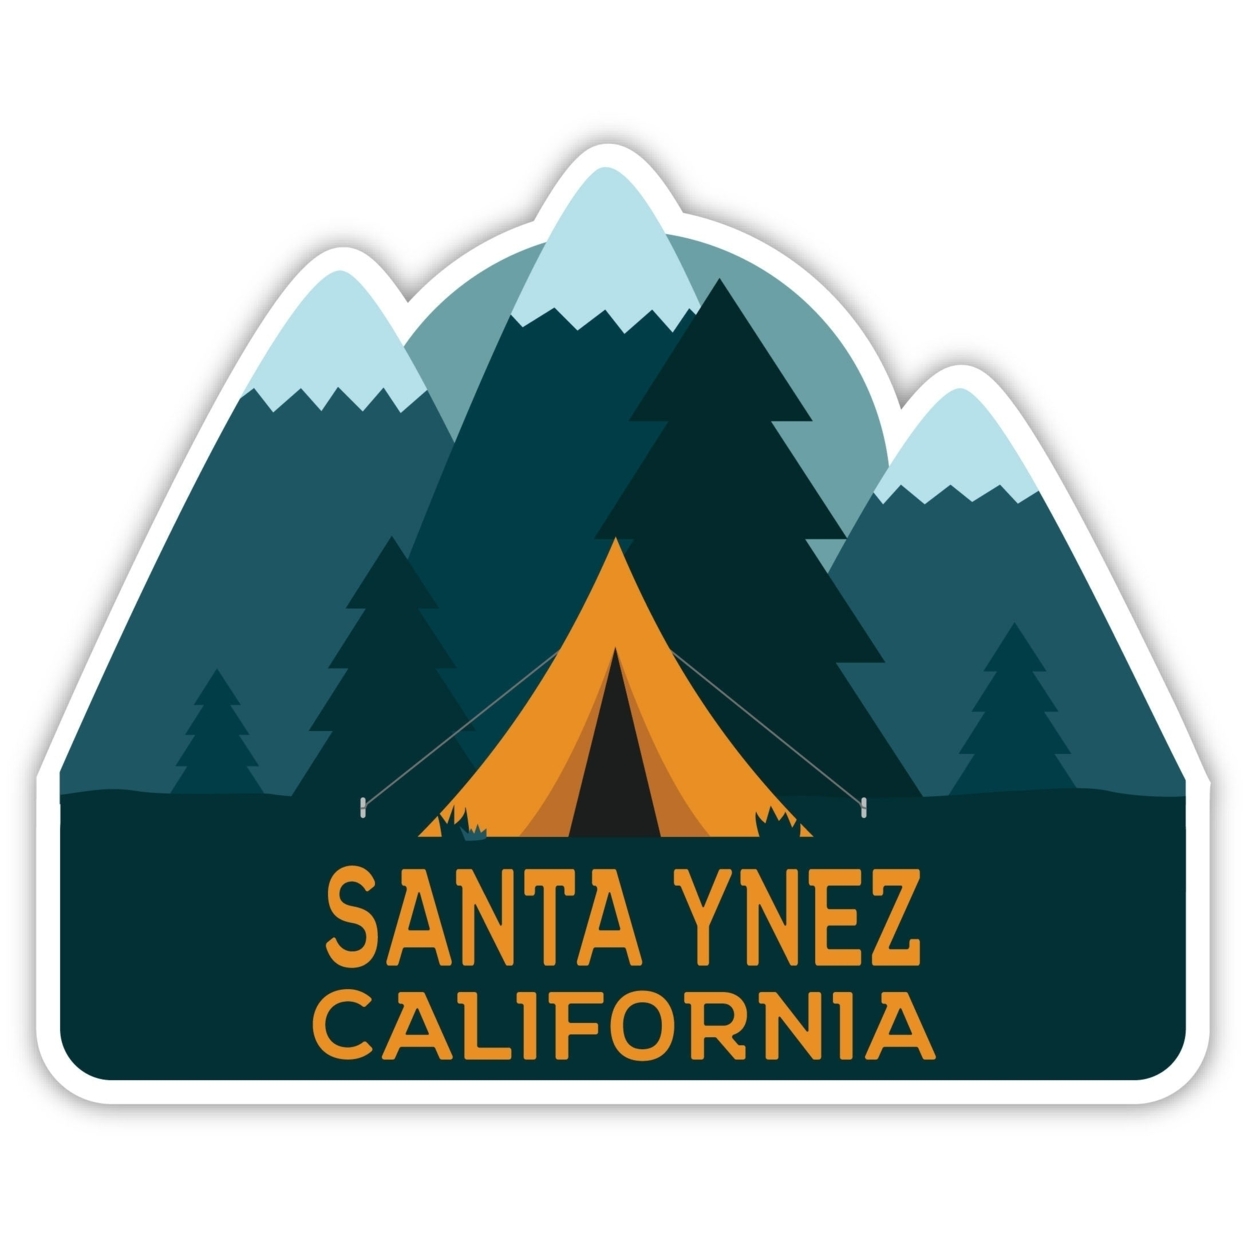 Santa Ynez California Souvenir Decorative Stickers (Choose Theme And Size) - Single Unit, 4-Inch, Tent